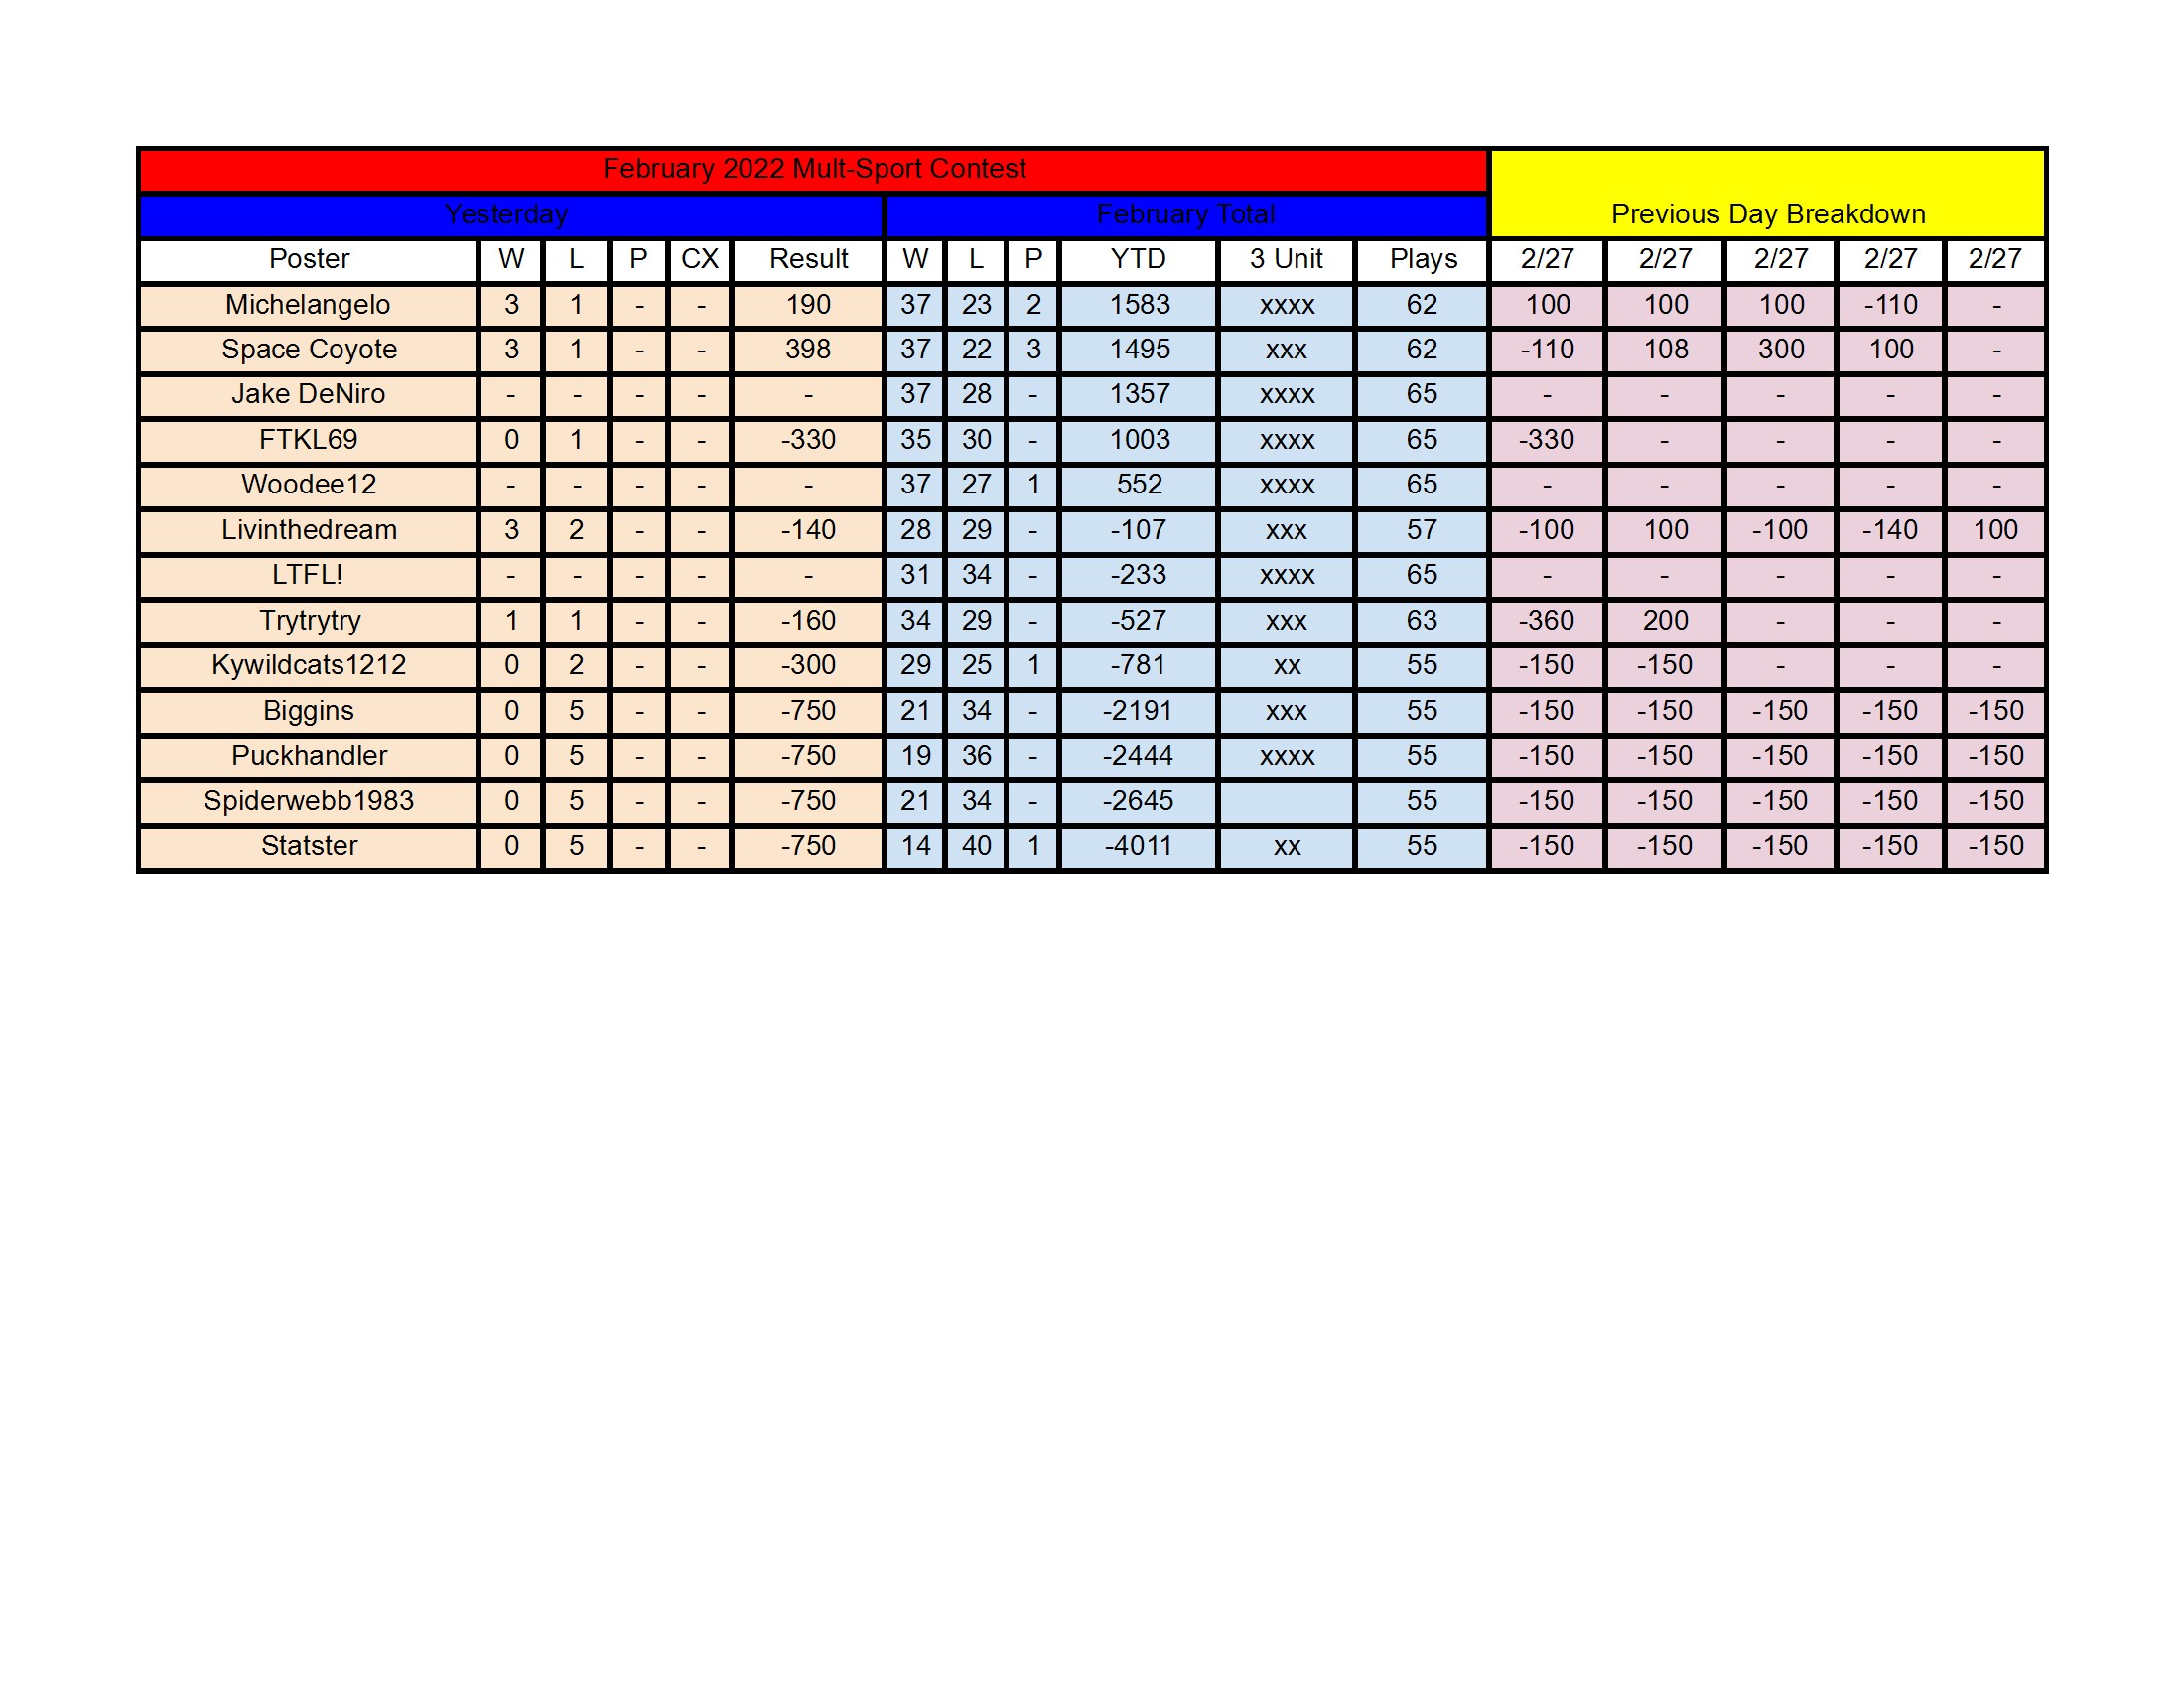 February Standings - 2_27 conv 1.jpeg